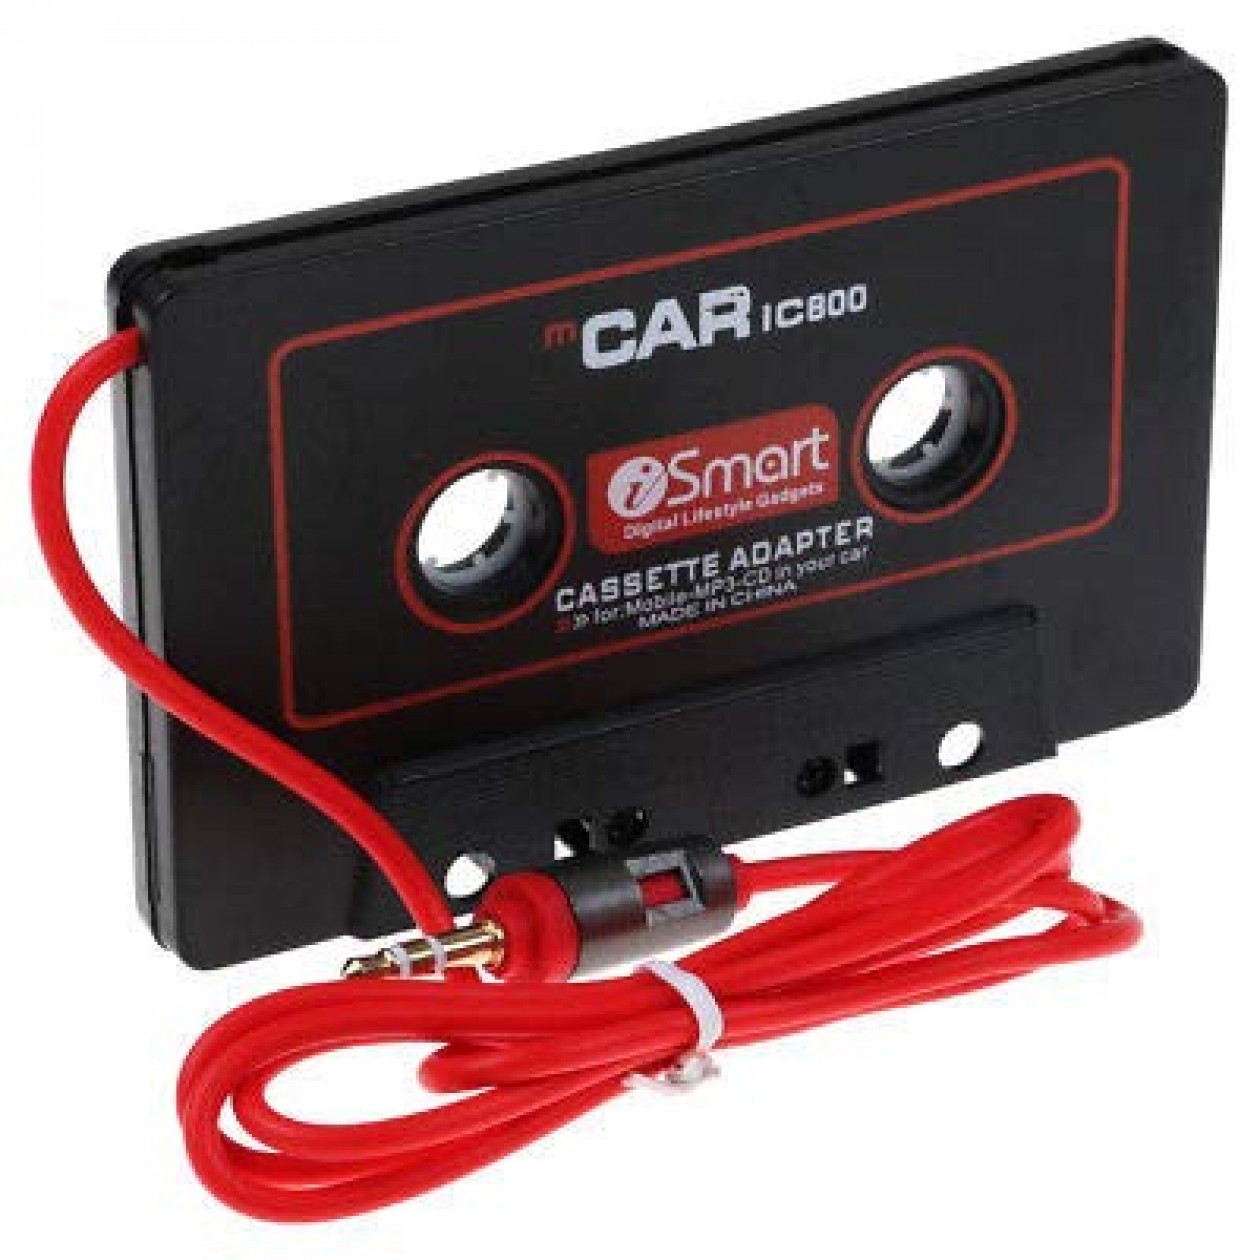 3.5mm Universal Car Audio Cassette Adapter for Smartphones, 3-Feet Cord